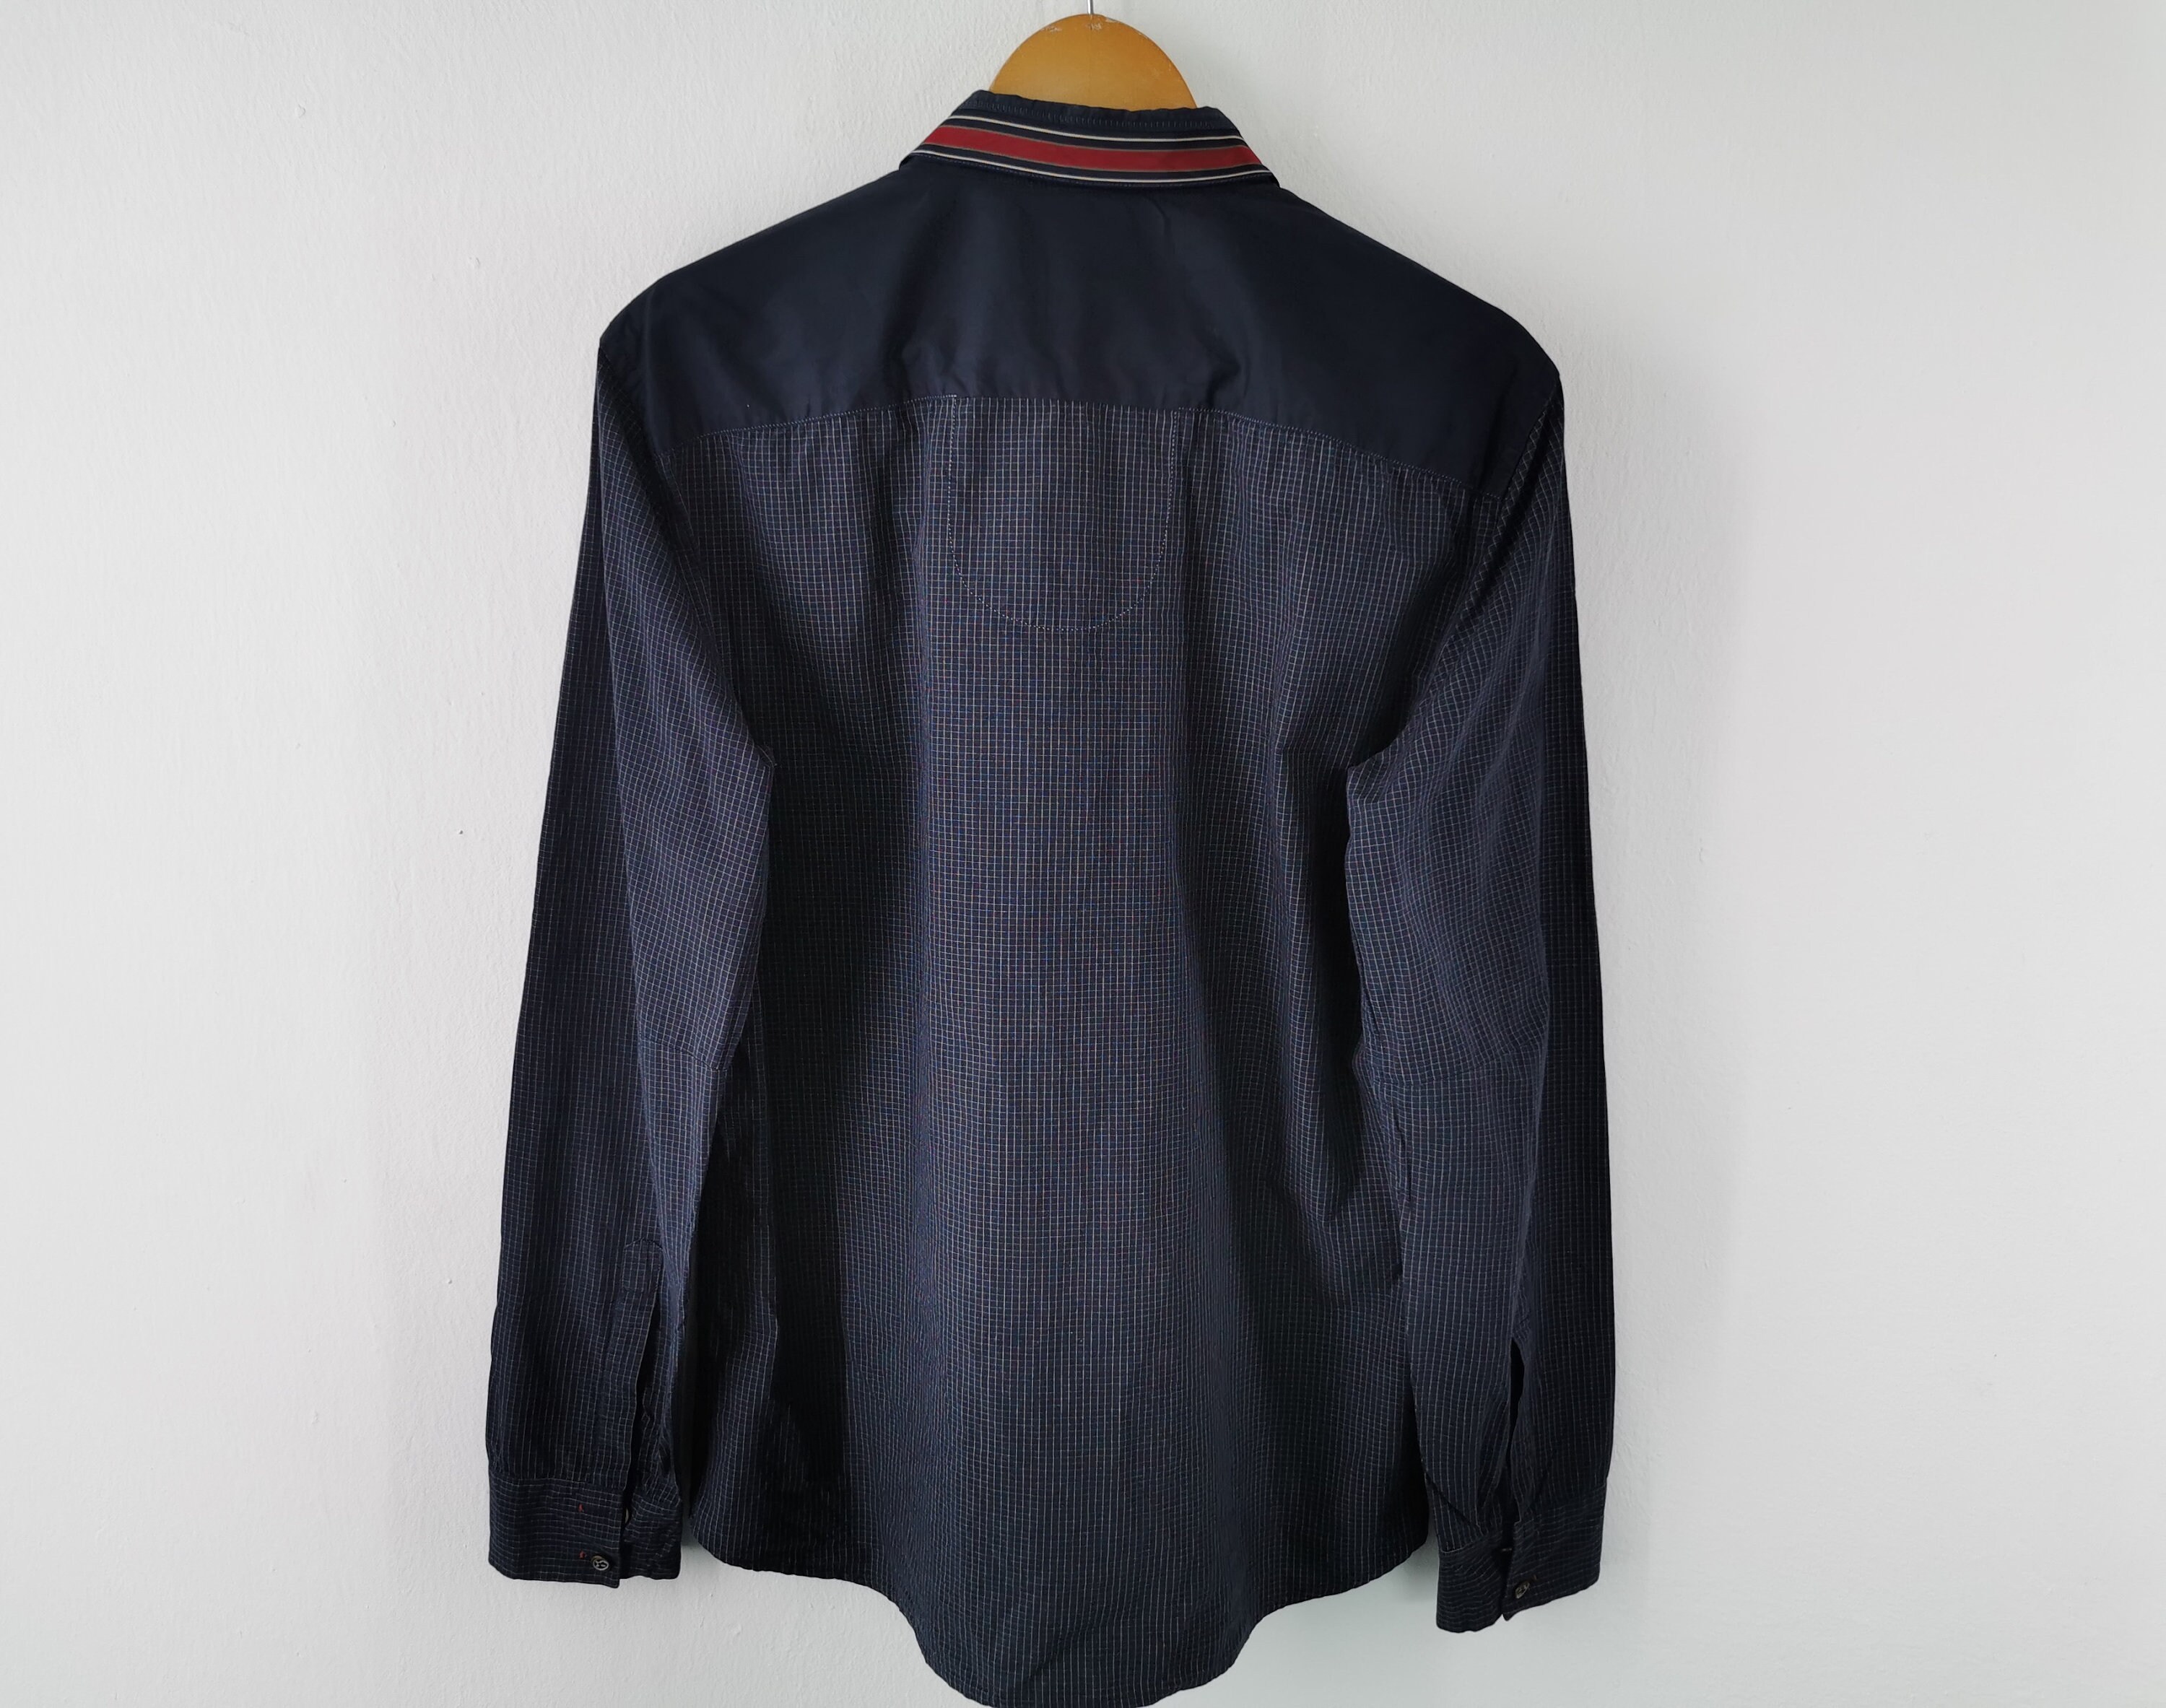 Marithe Francois Girbaud Shirt Vintage Girbaud Button Shirt | Etsy